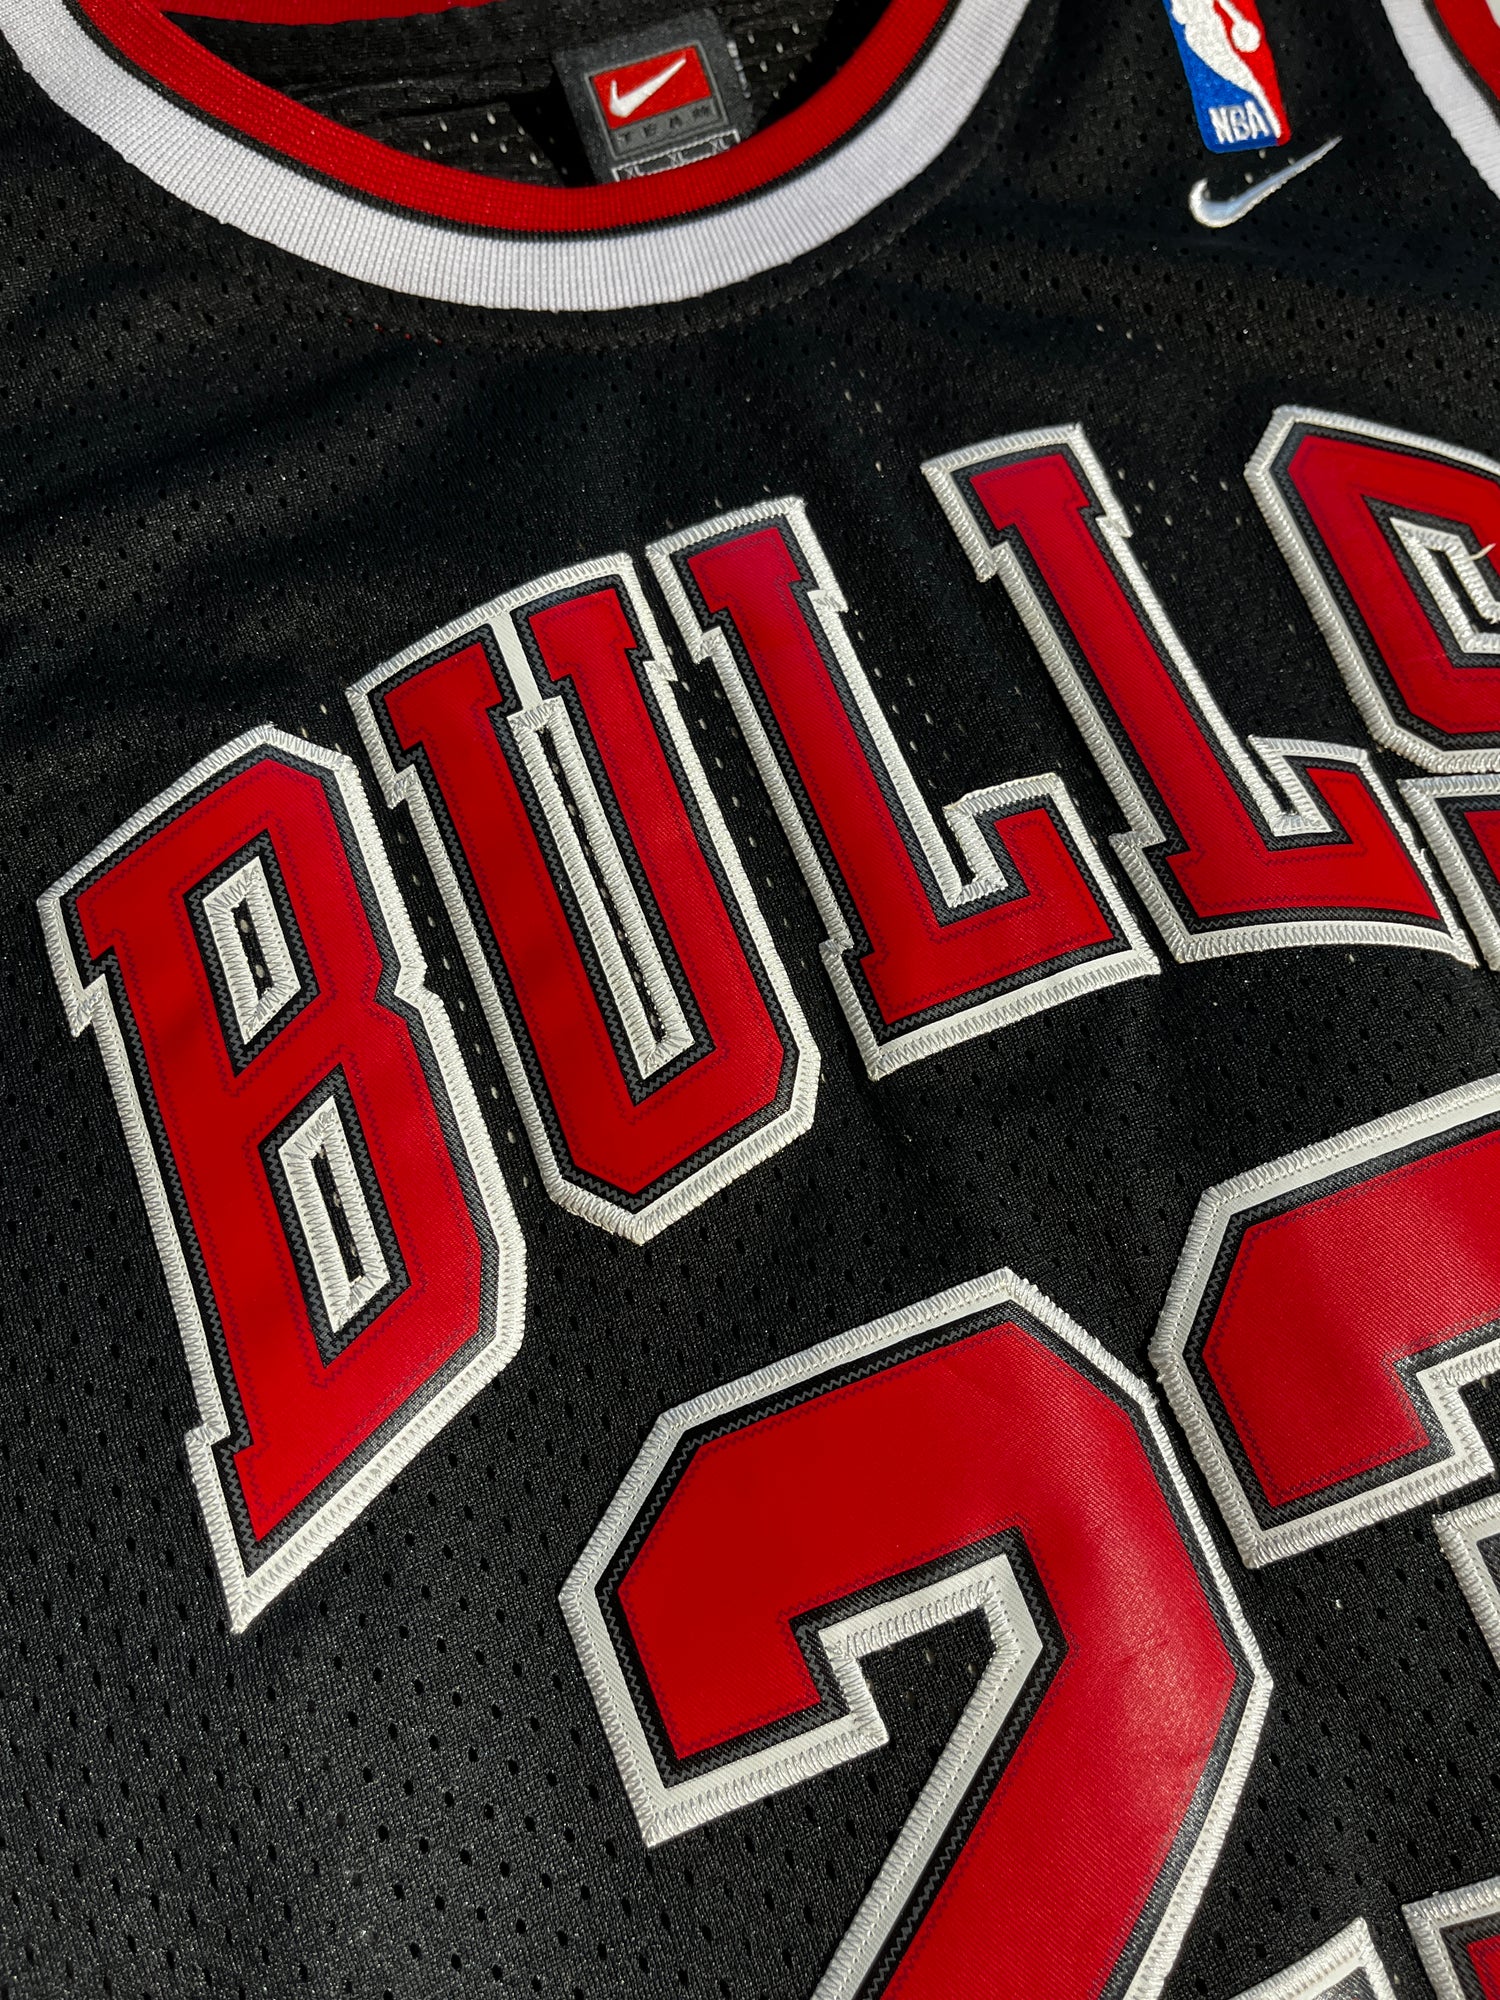 Chicago Bulls 23 Michael Jordan basketball black pinstripe jersey NBA  vintage M